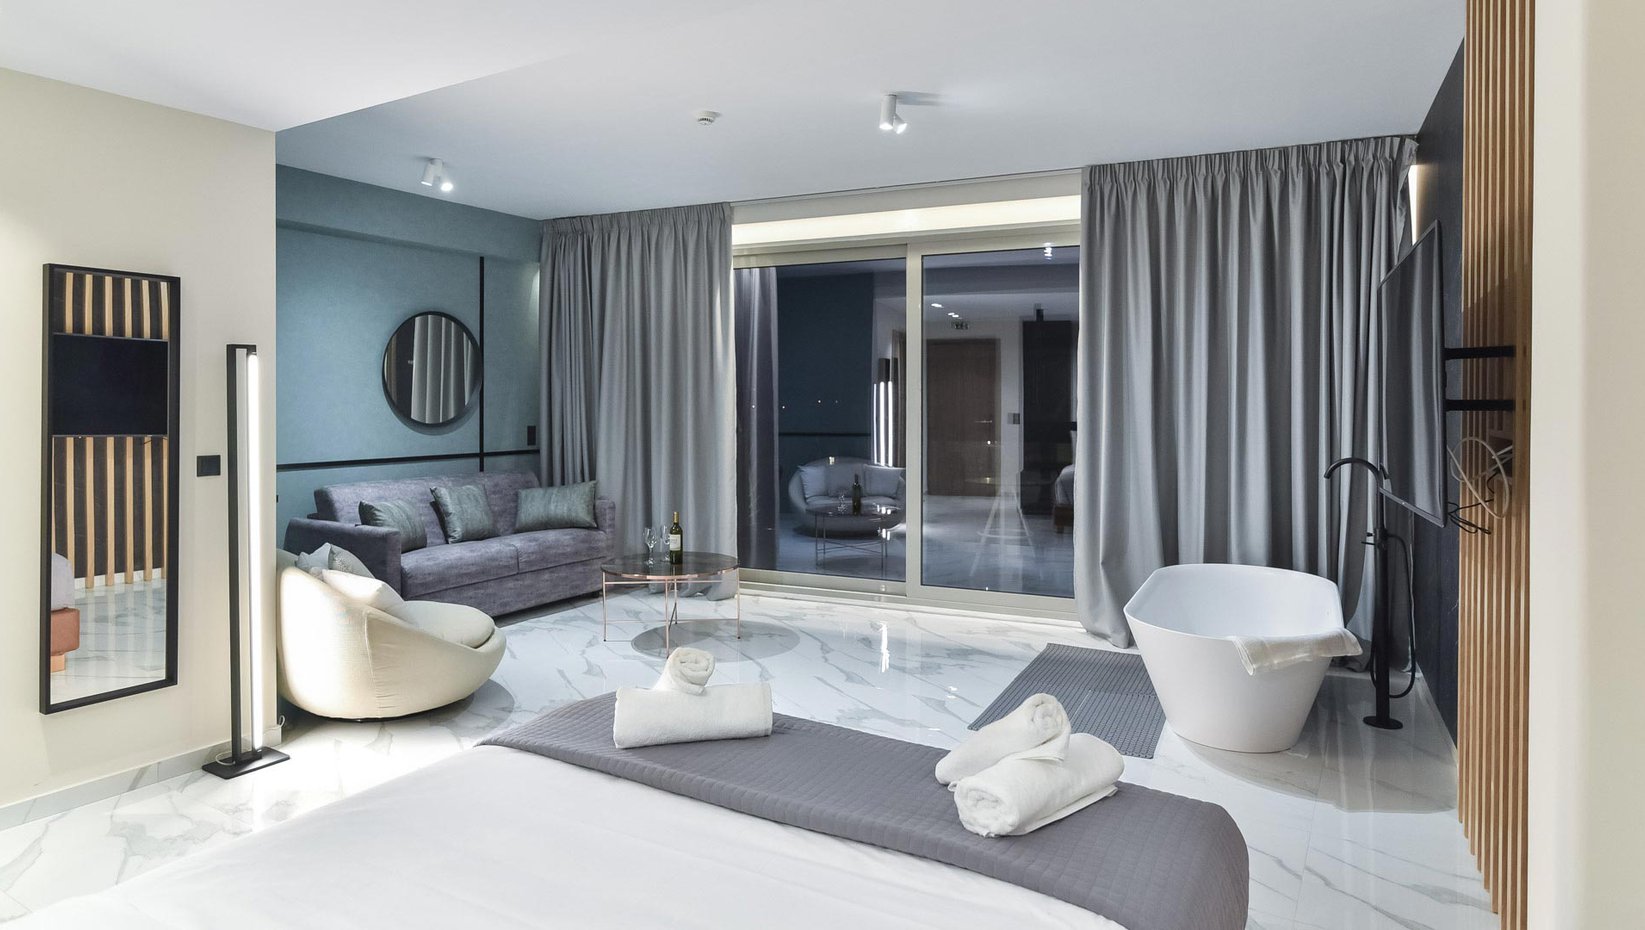 Enattica Suites, living room with a bathtub